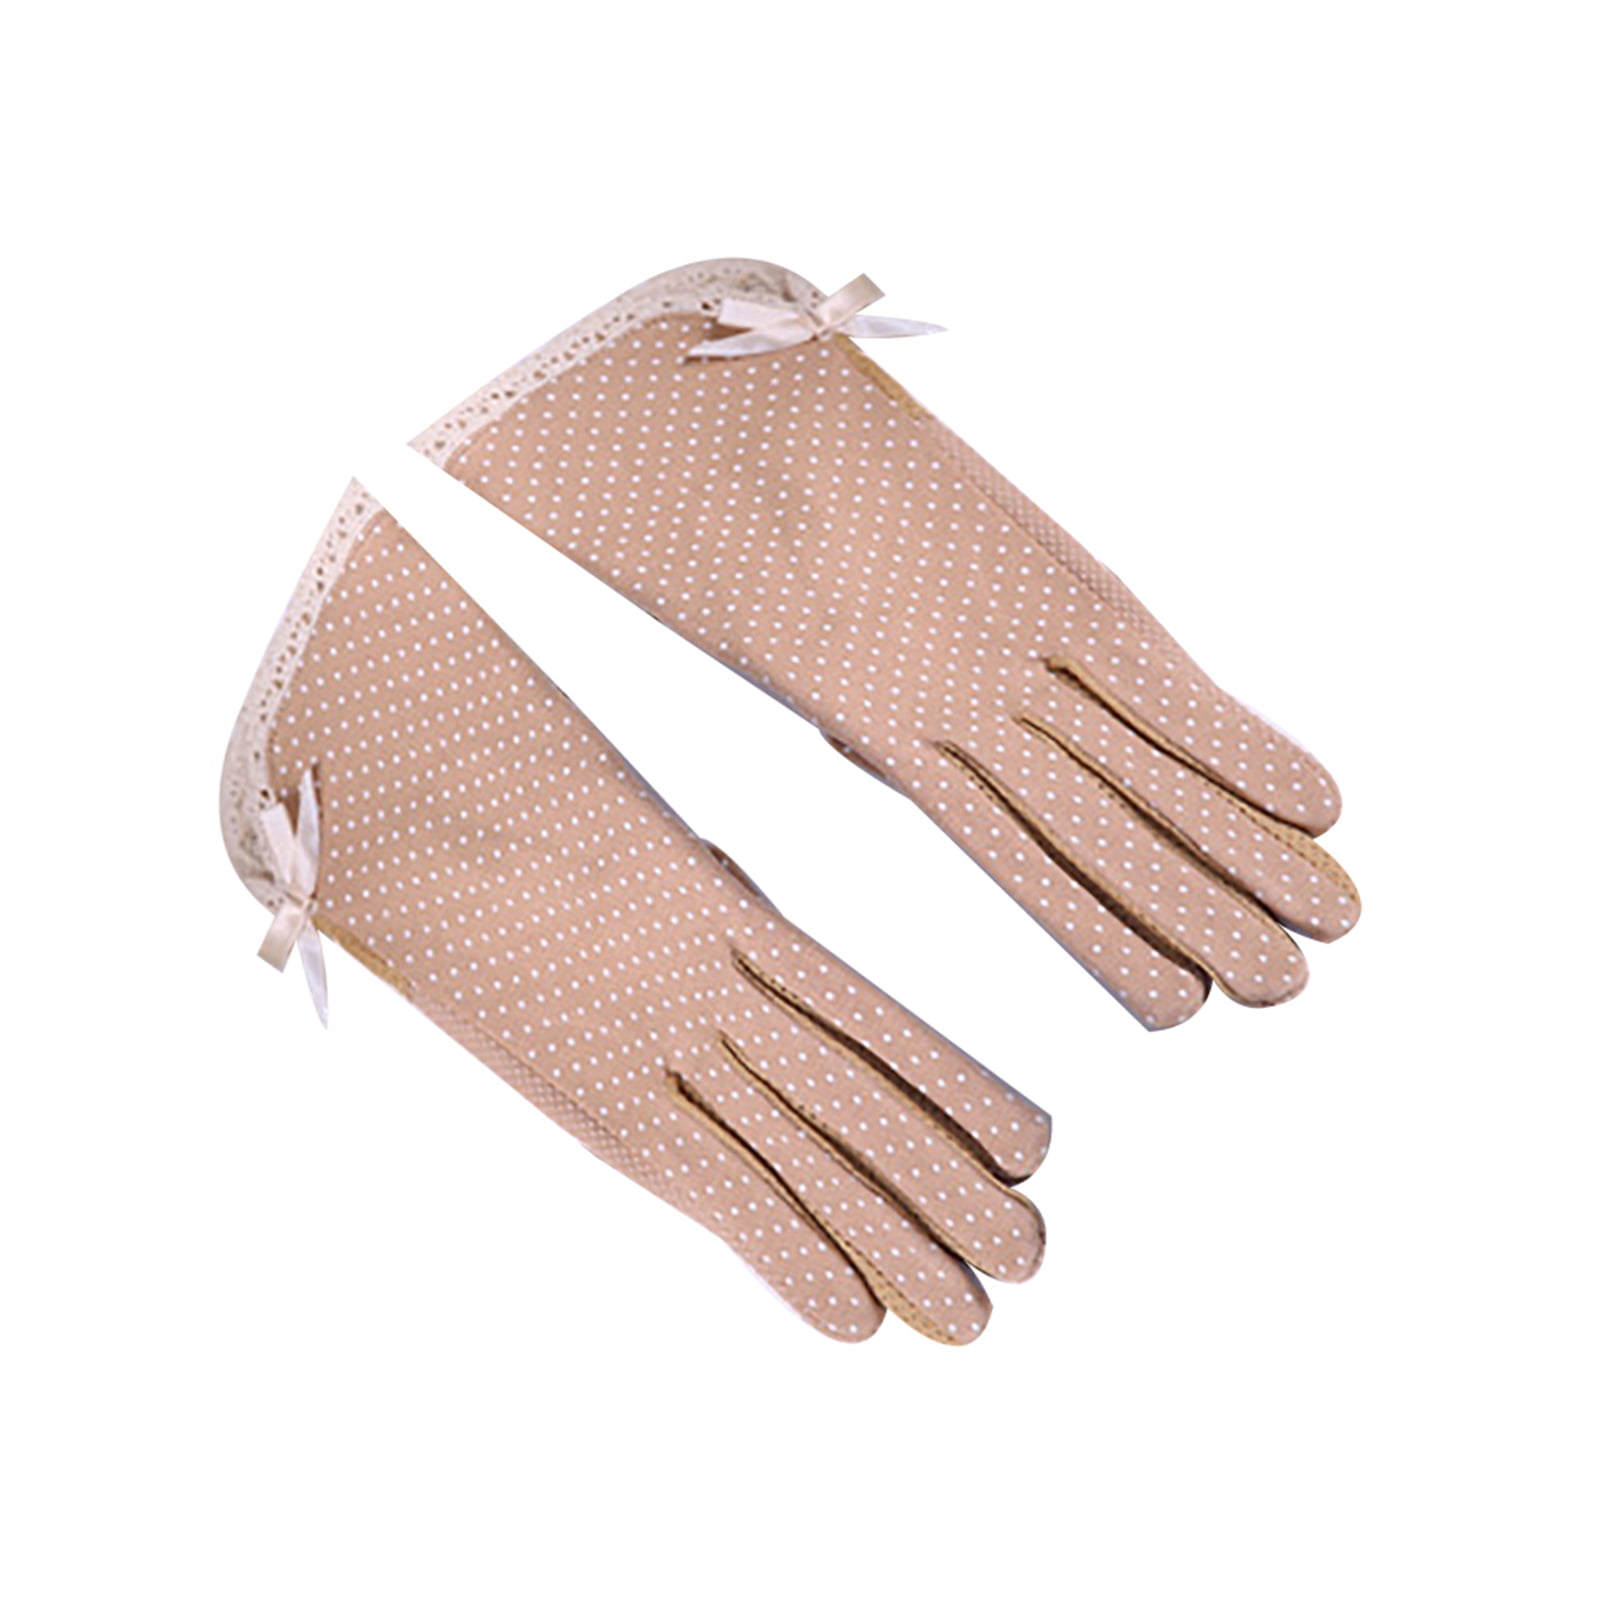 Grofry Women Gloves,Summer Cotton Lace Anti-Slip Touch Screen Sun  Protection Driving Mitten Khaki 